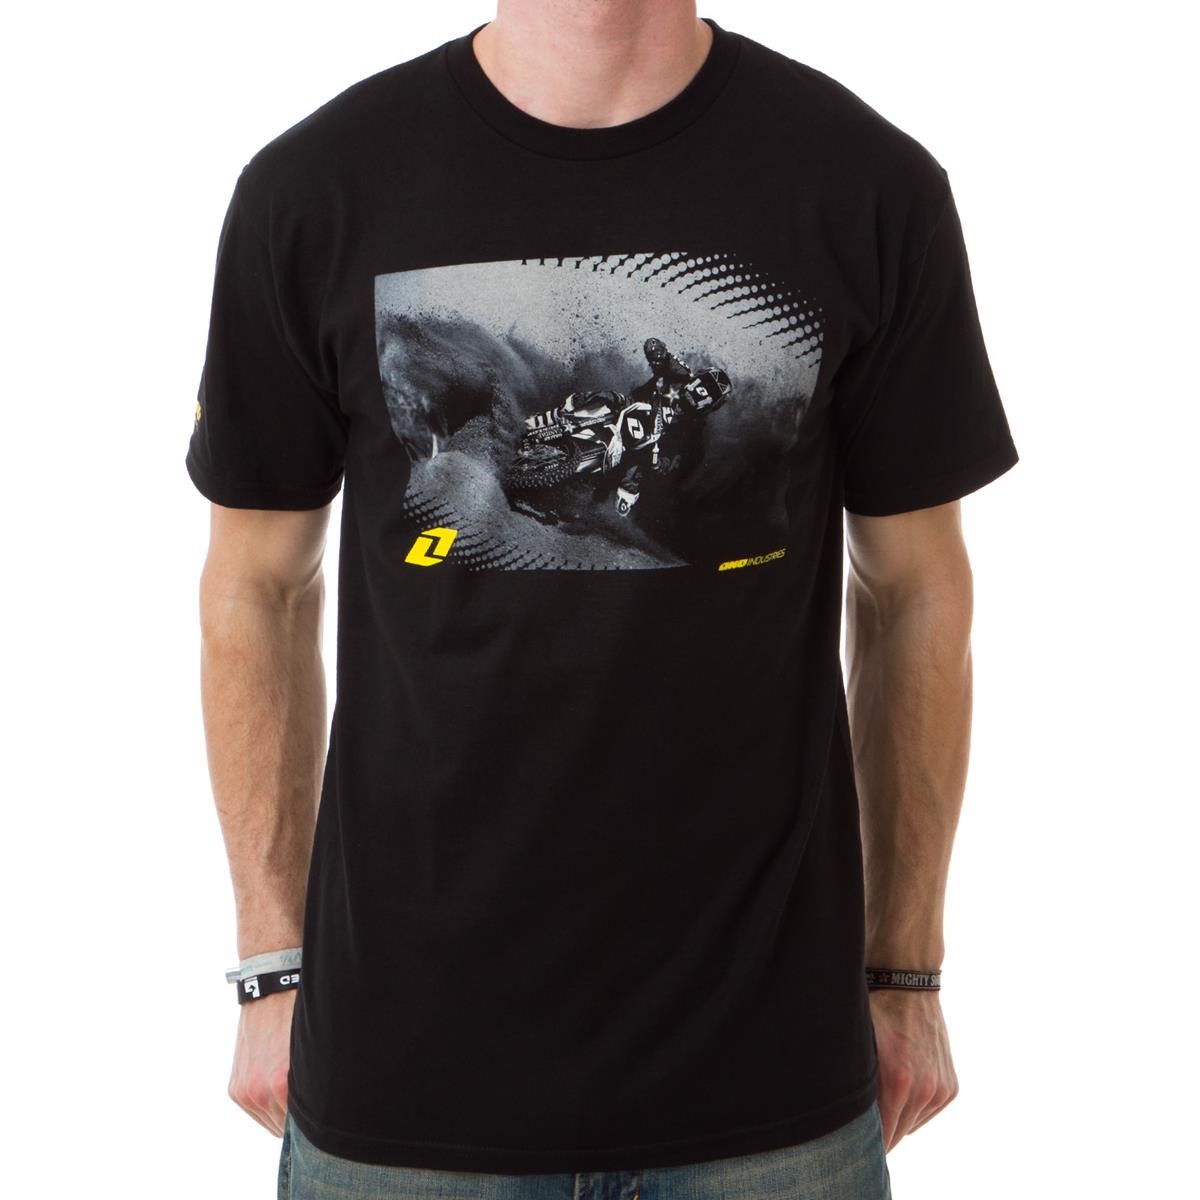 Freizeit/Streetwear Bekleidung-T-Shirts/Polos - One Industries T-Shirt Rocka Jet Black